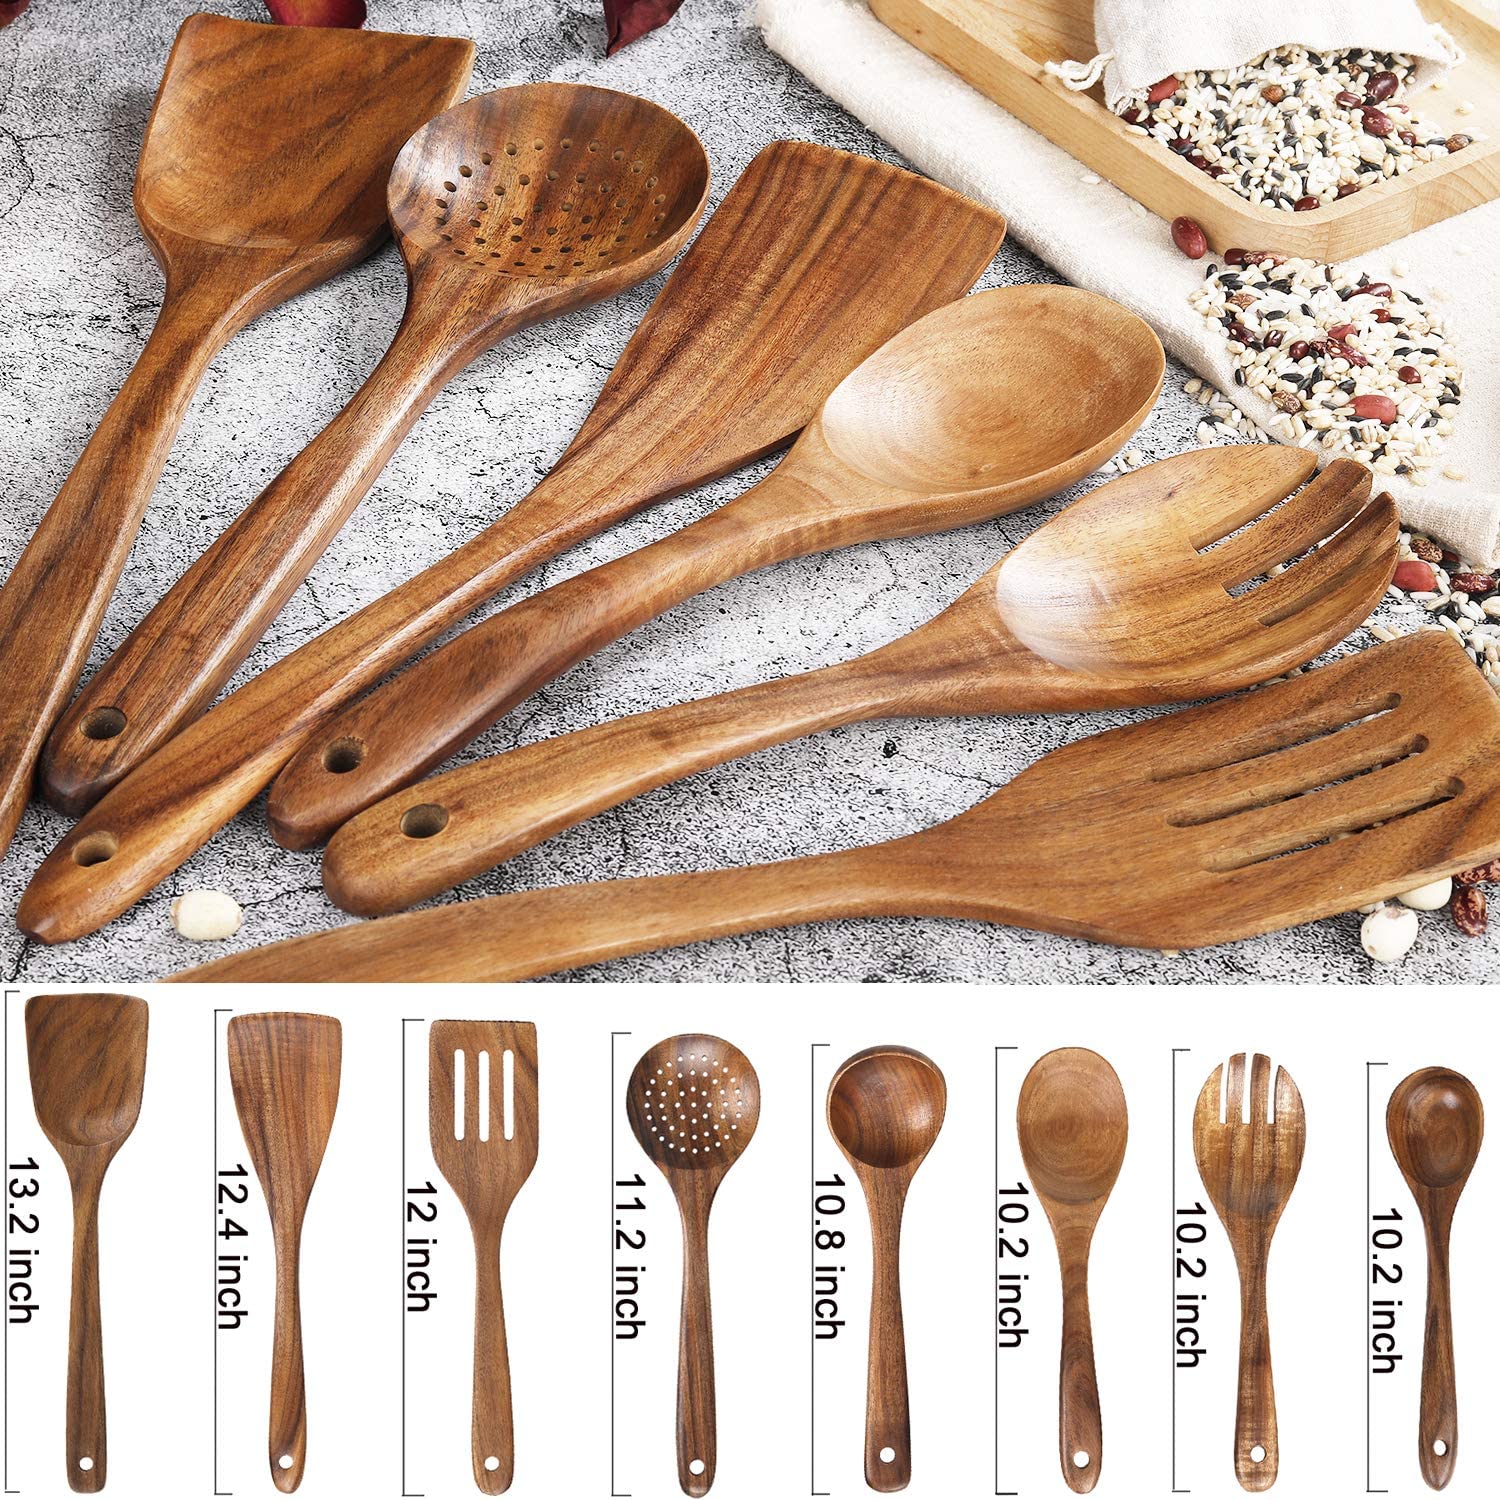 https://bigbigmart.com/wp-content/uploads/2022/01/Wooden-Spoons-for-Cooking-Nonstick-Kitchen-Utensil-Set-Teak-8-Pack..jpg